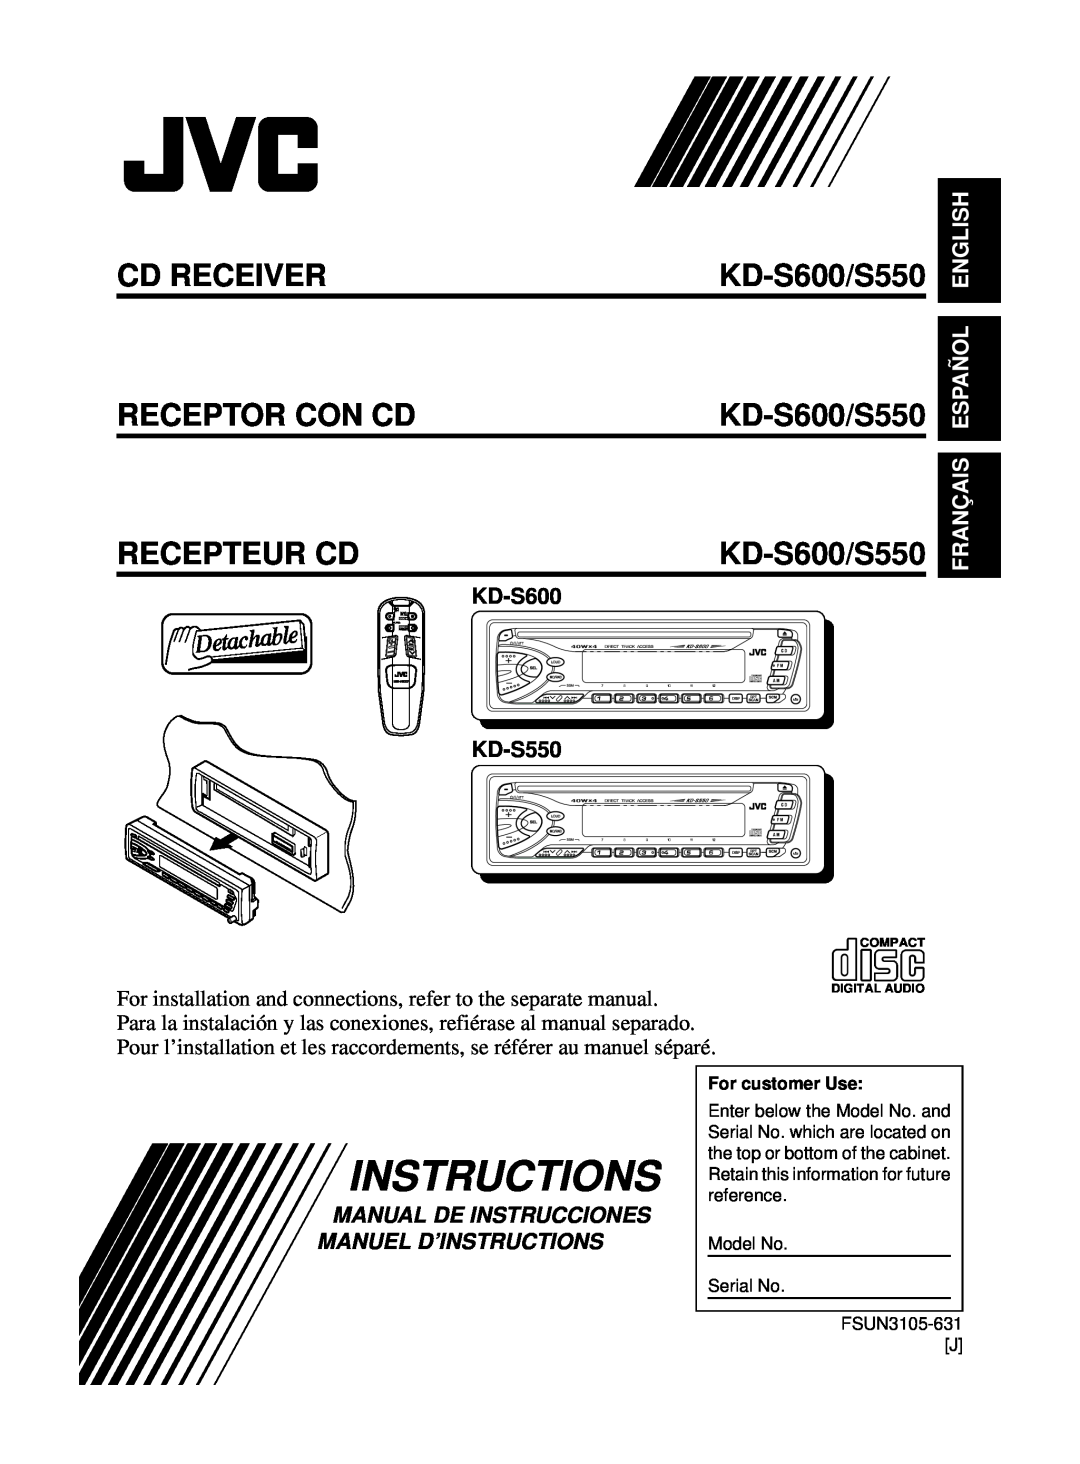 JVC KD-S600 manual Instructions, KD-S550, Français Español English, Cd Receiver Receptor Con Cd Recepteur Cd 